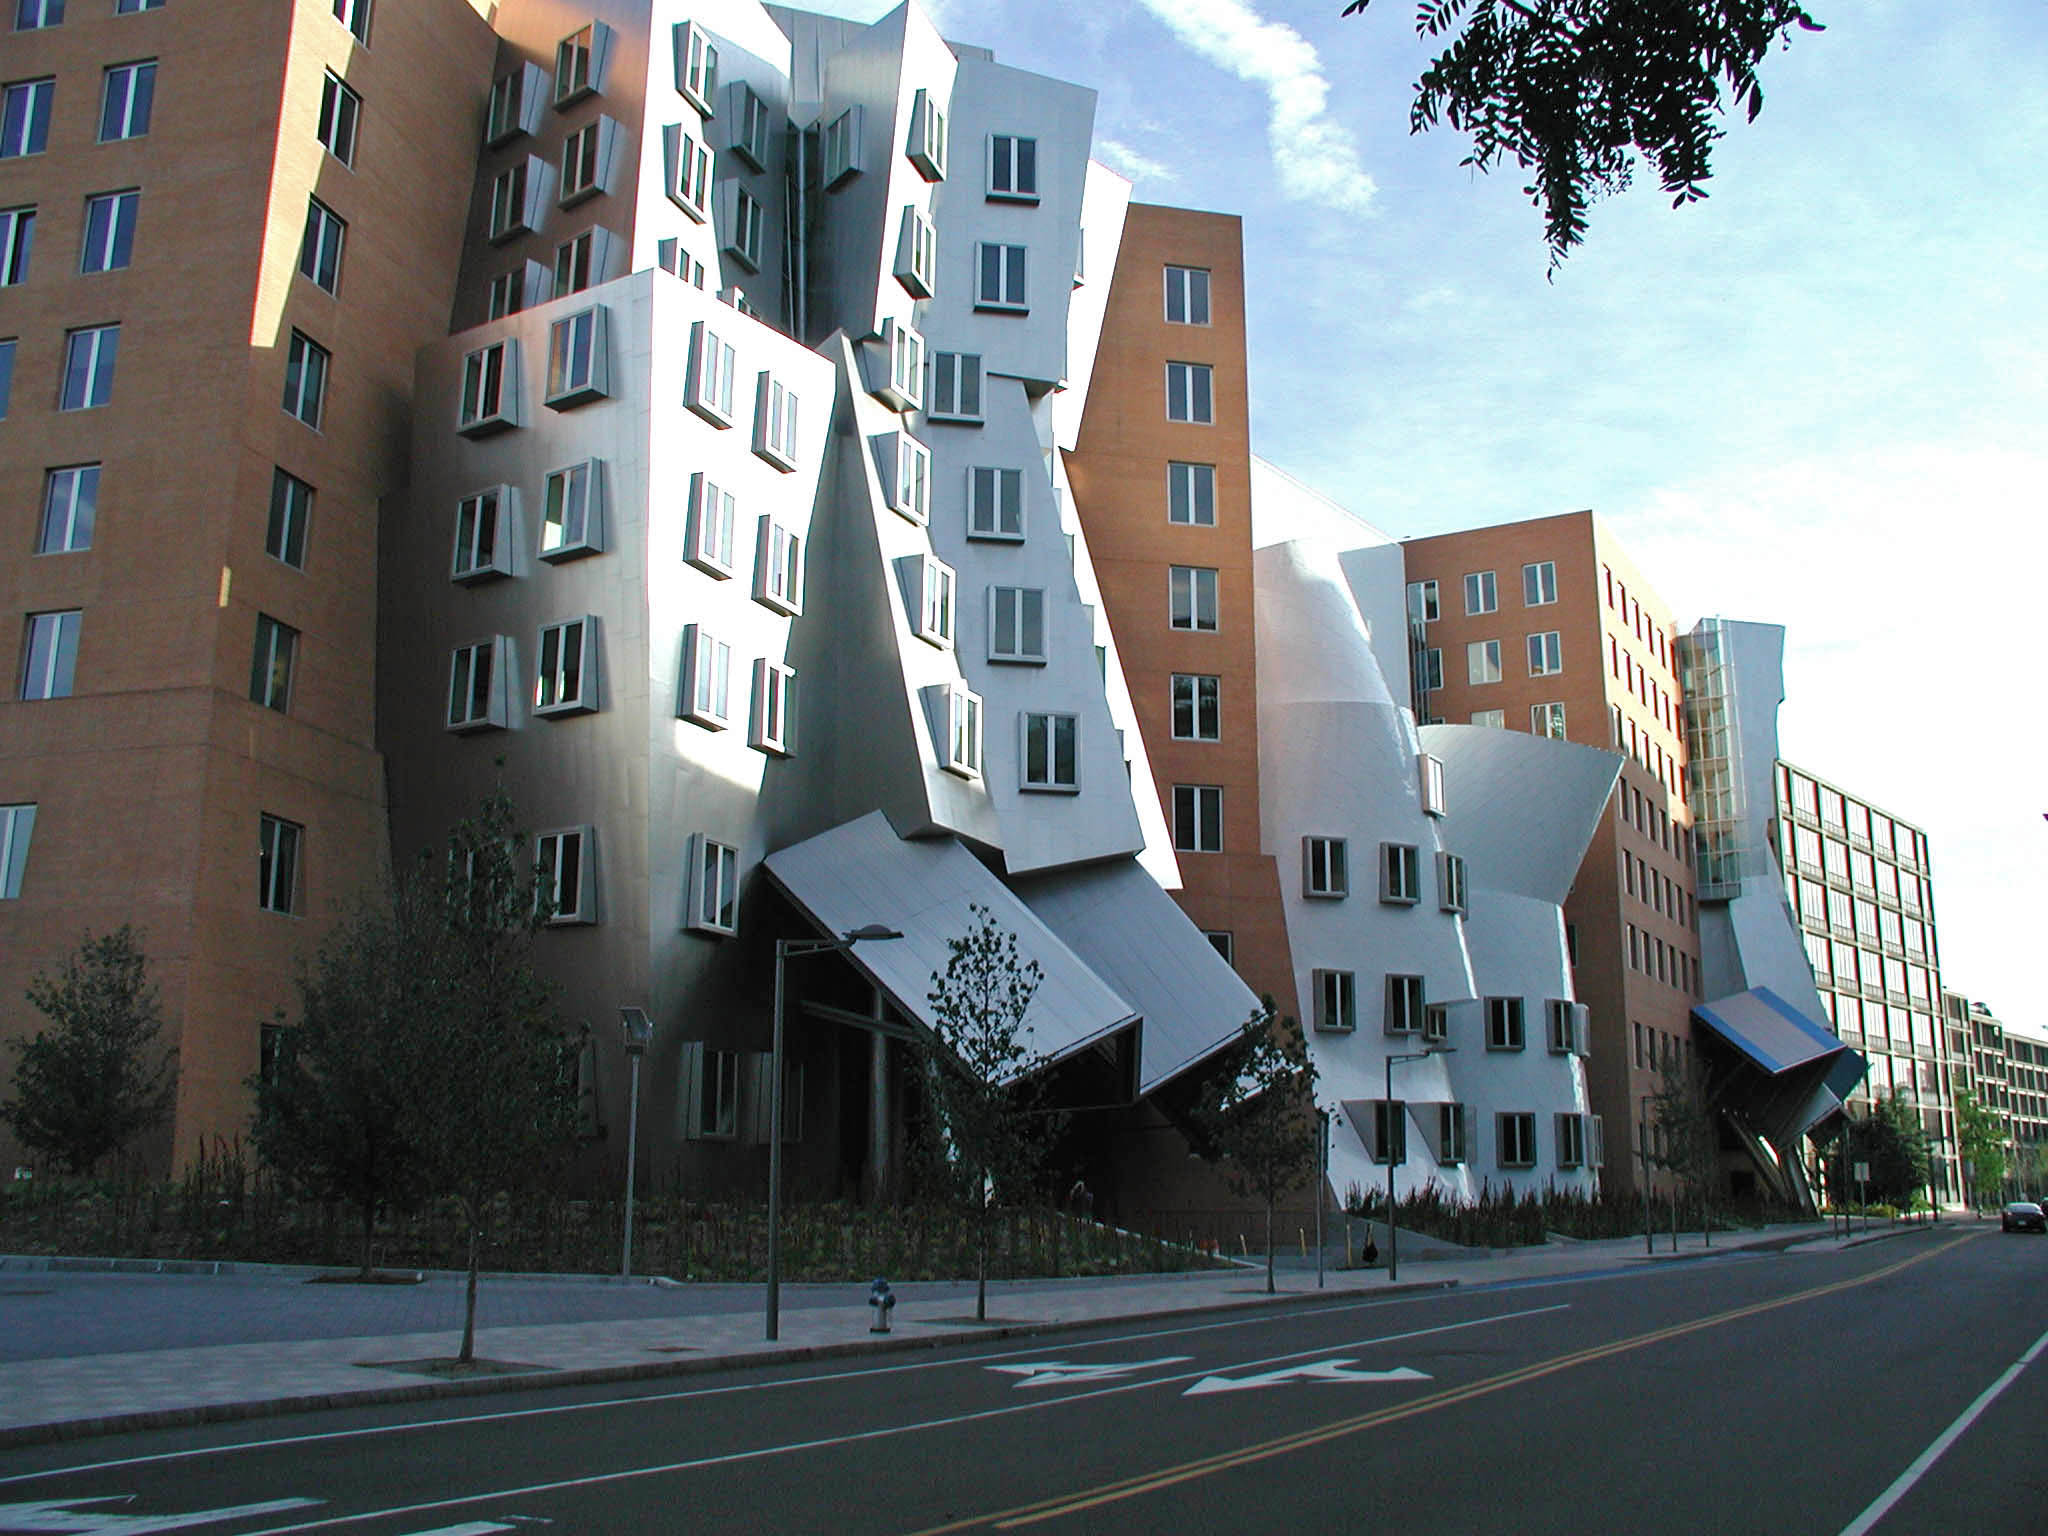 MIT 计算机科学与人工智能实验室，孕育了多位图灵奖获得者的地方。Richard Stallman，Tim Berners-Lee 也都曾在这里展开各自的工作